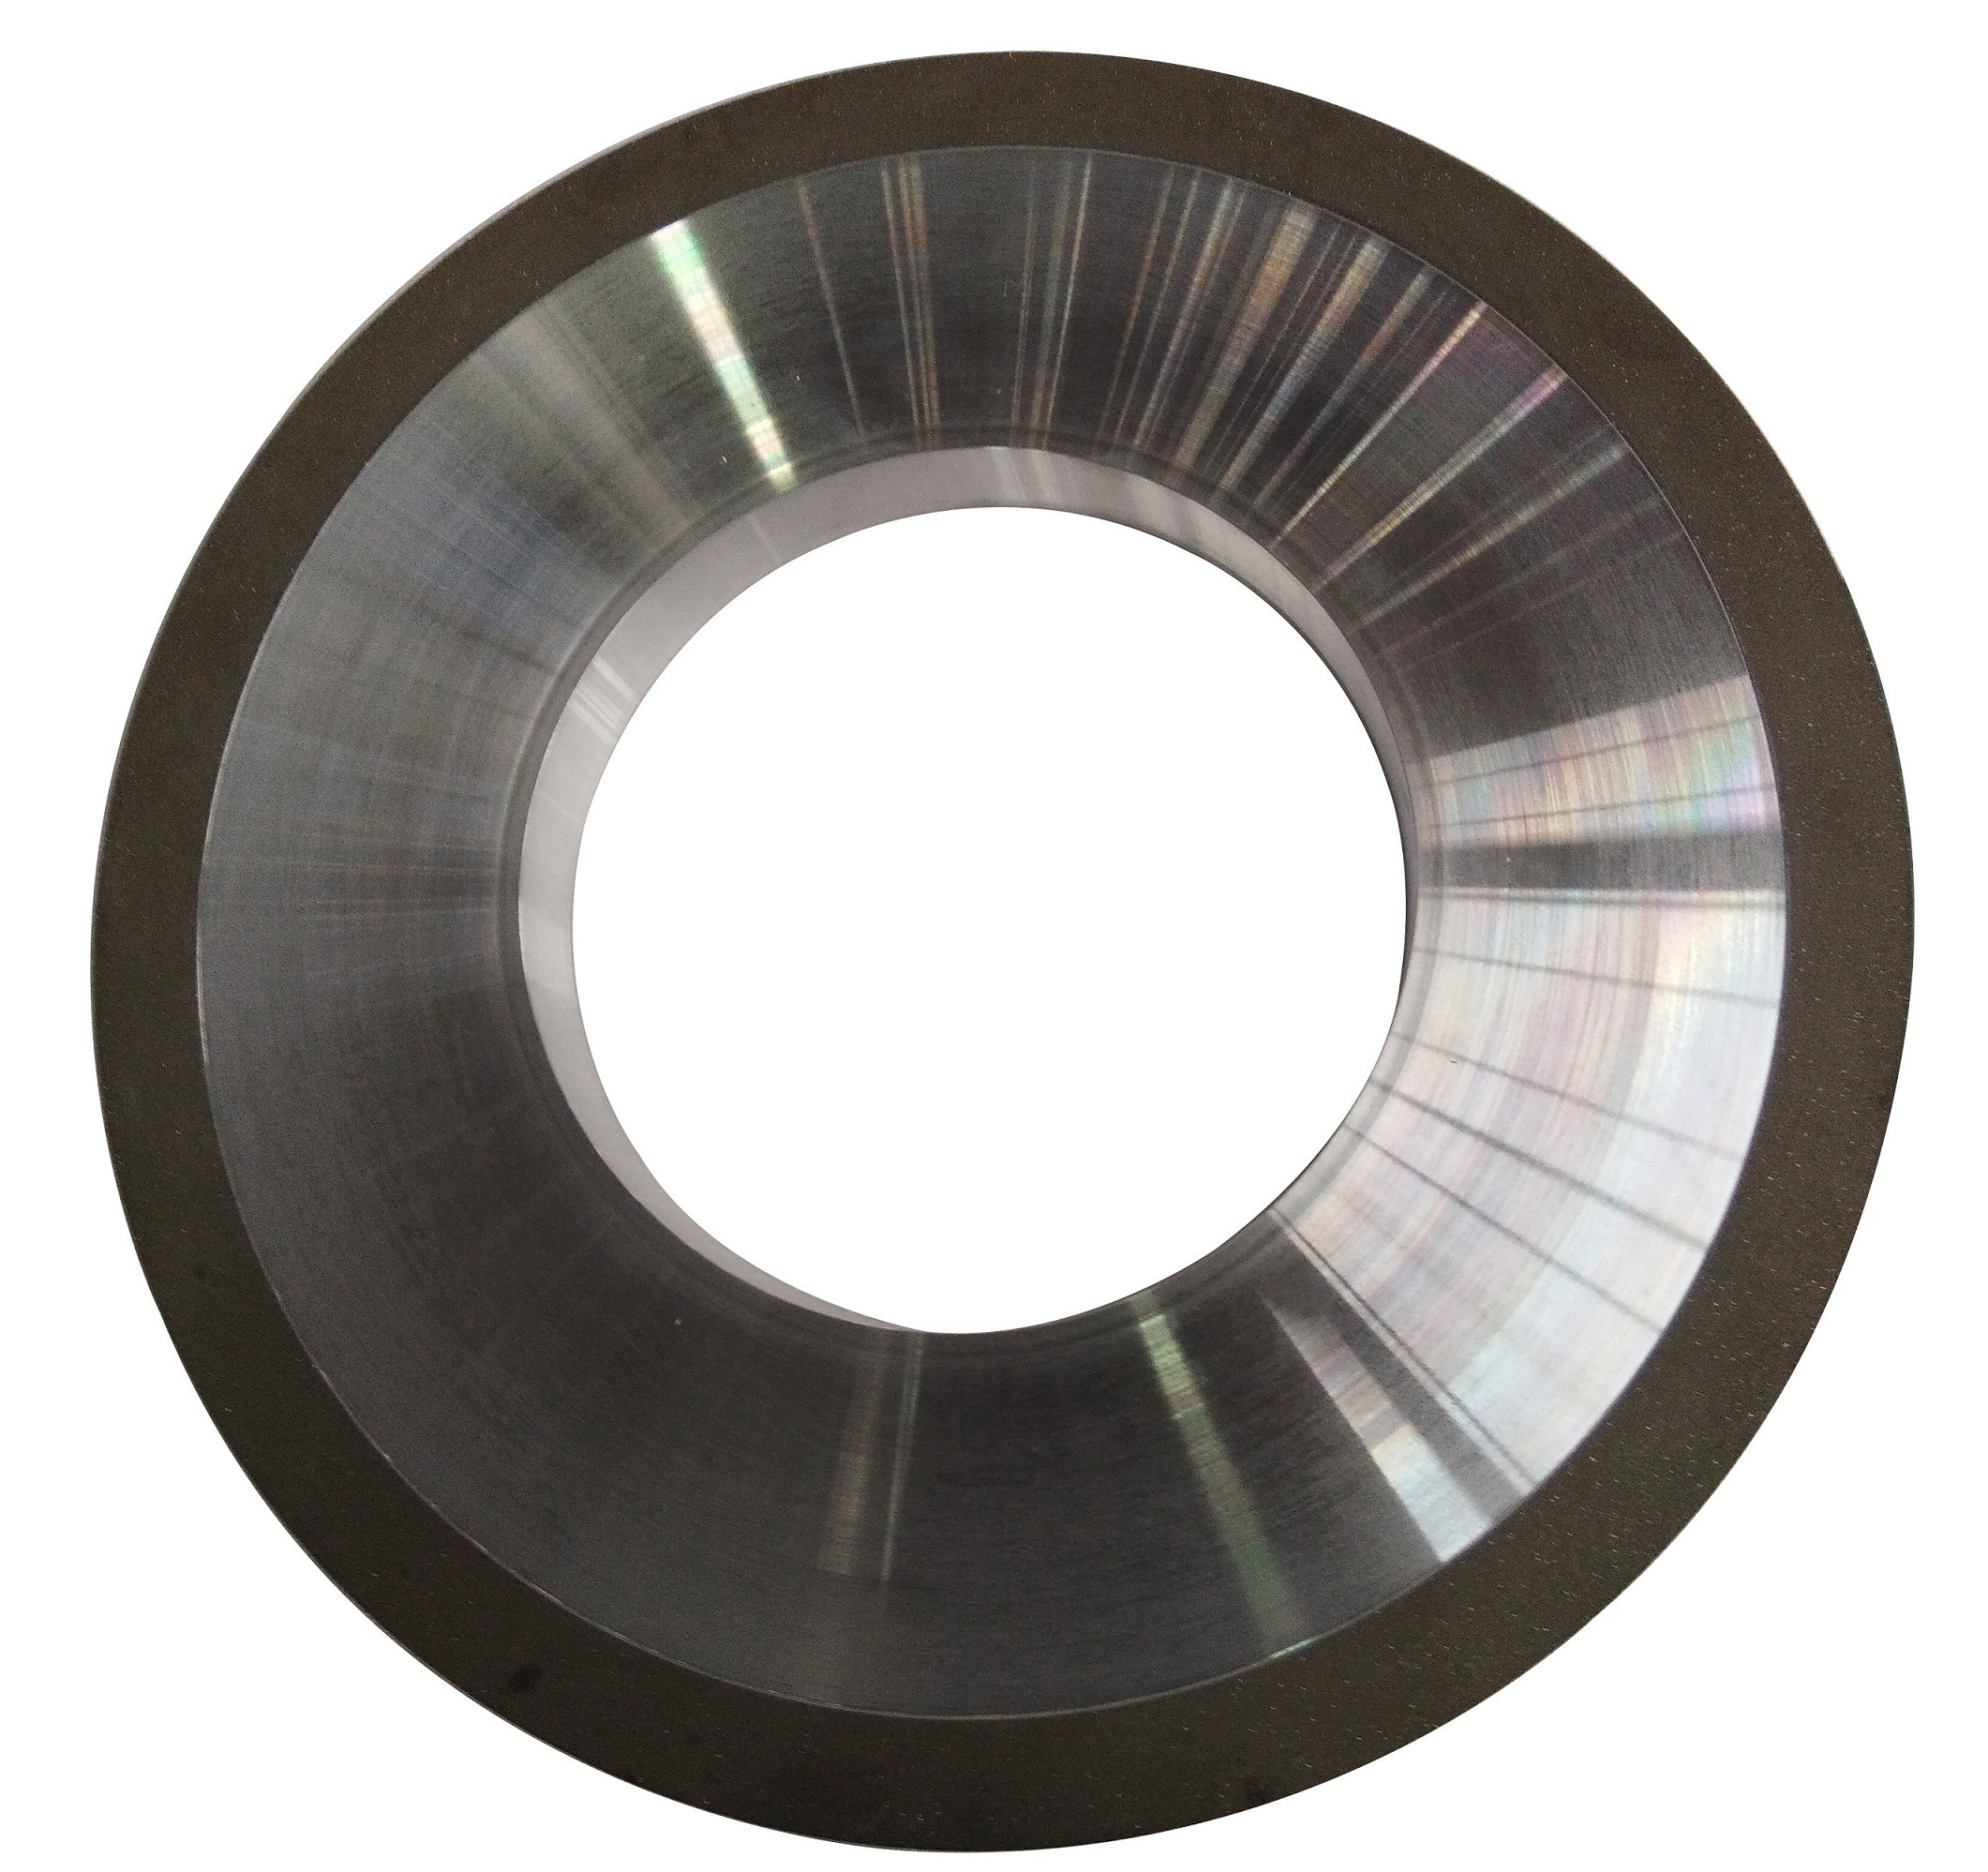  Sharping Polishing Diamond Grinding Wheels Resin Bonded Flat Cup Bowl Disc Shape Manufactures